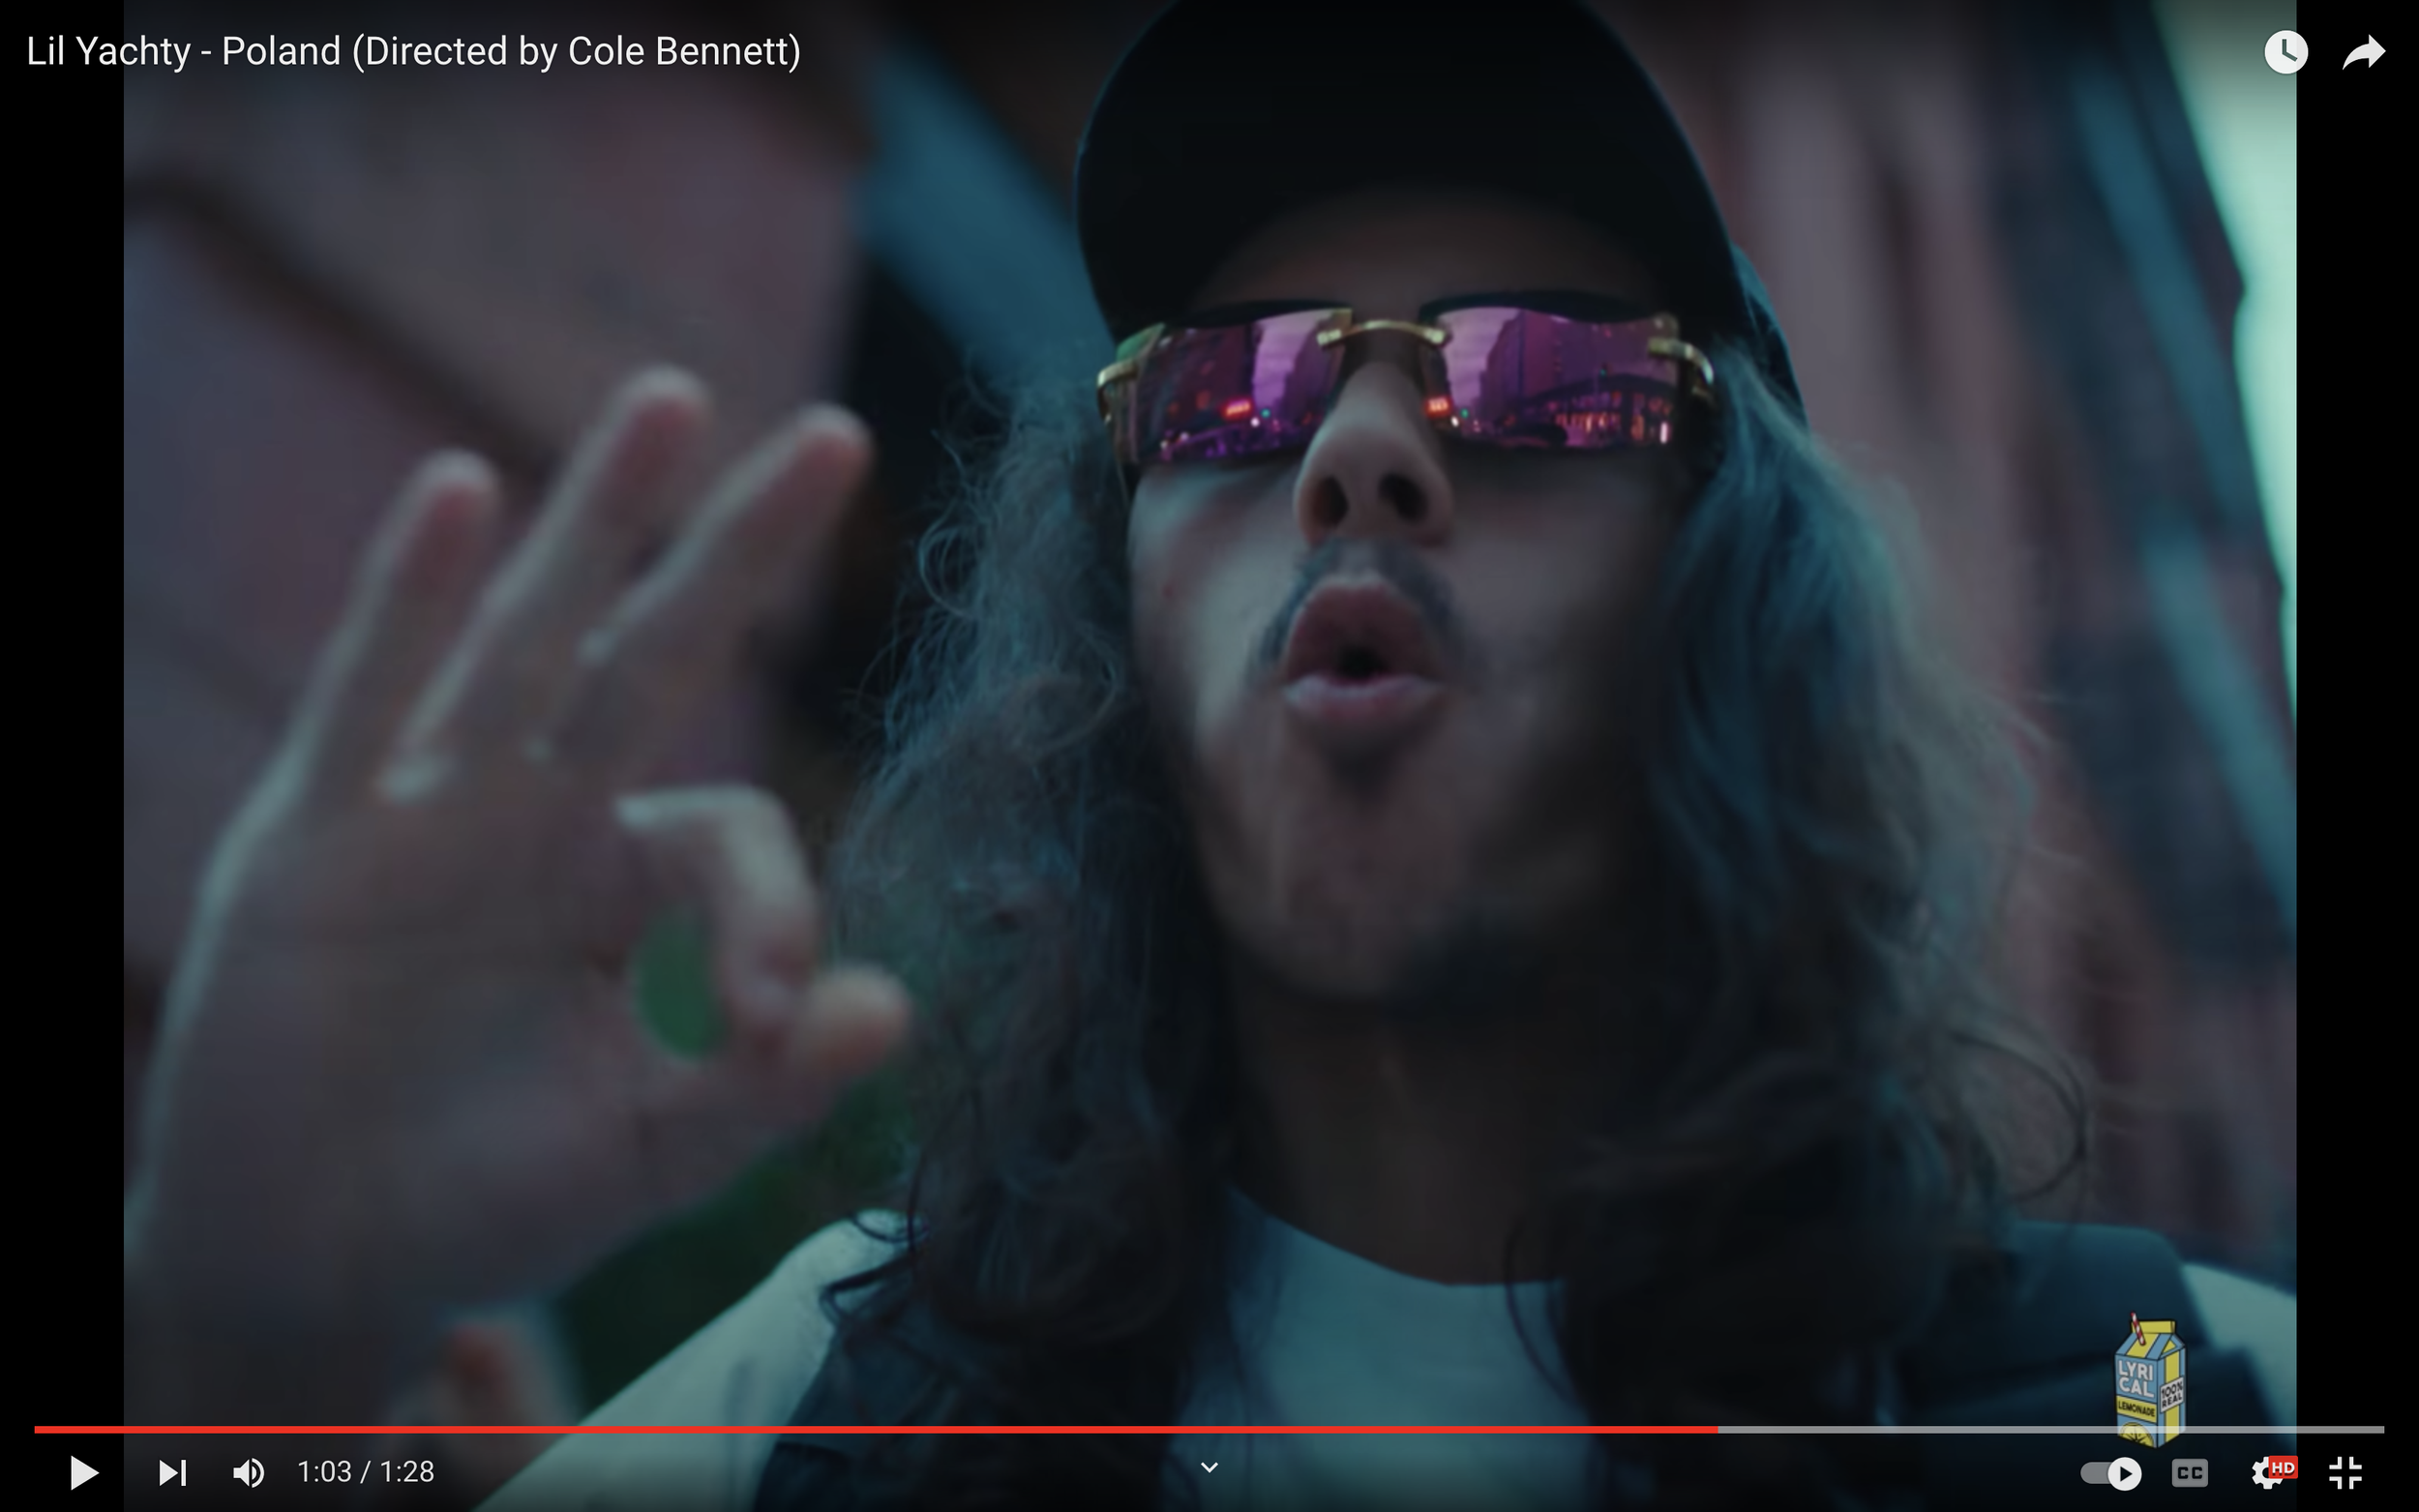 Lil Yachty - Poland Music Video Screenshot